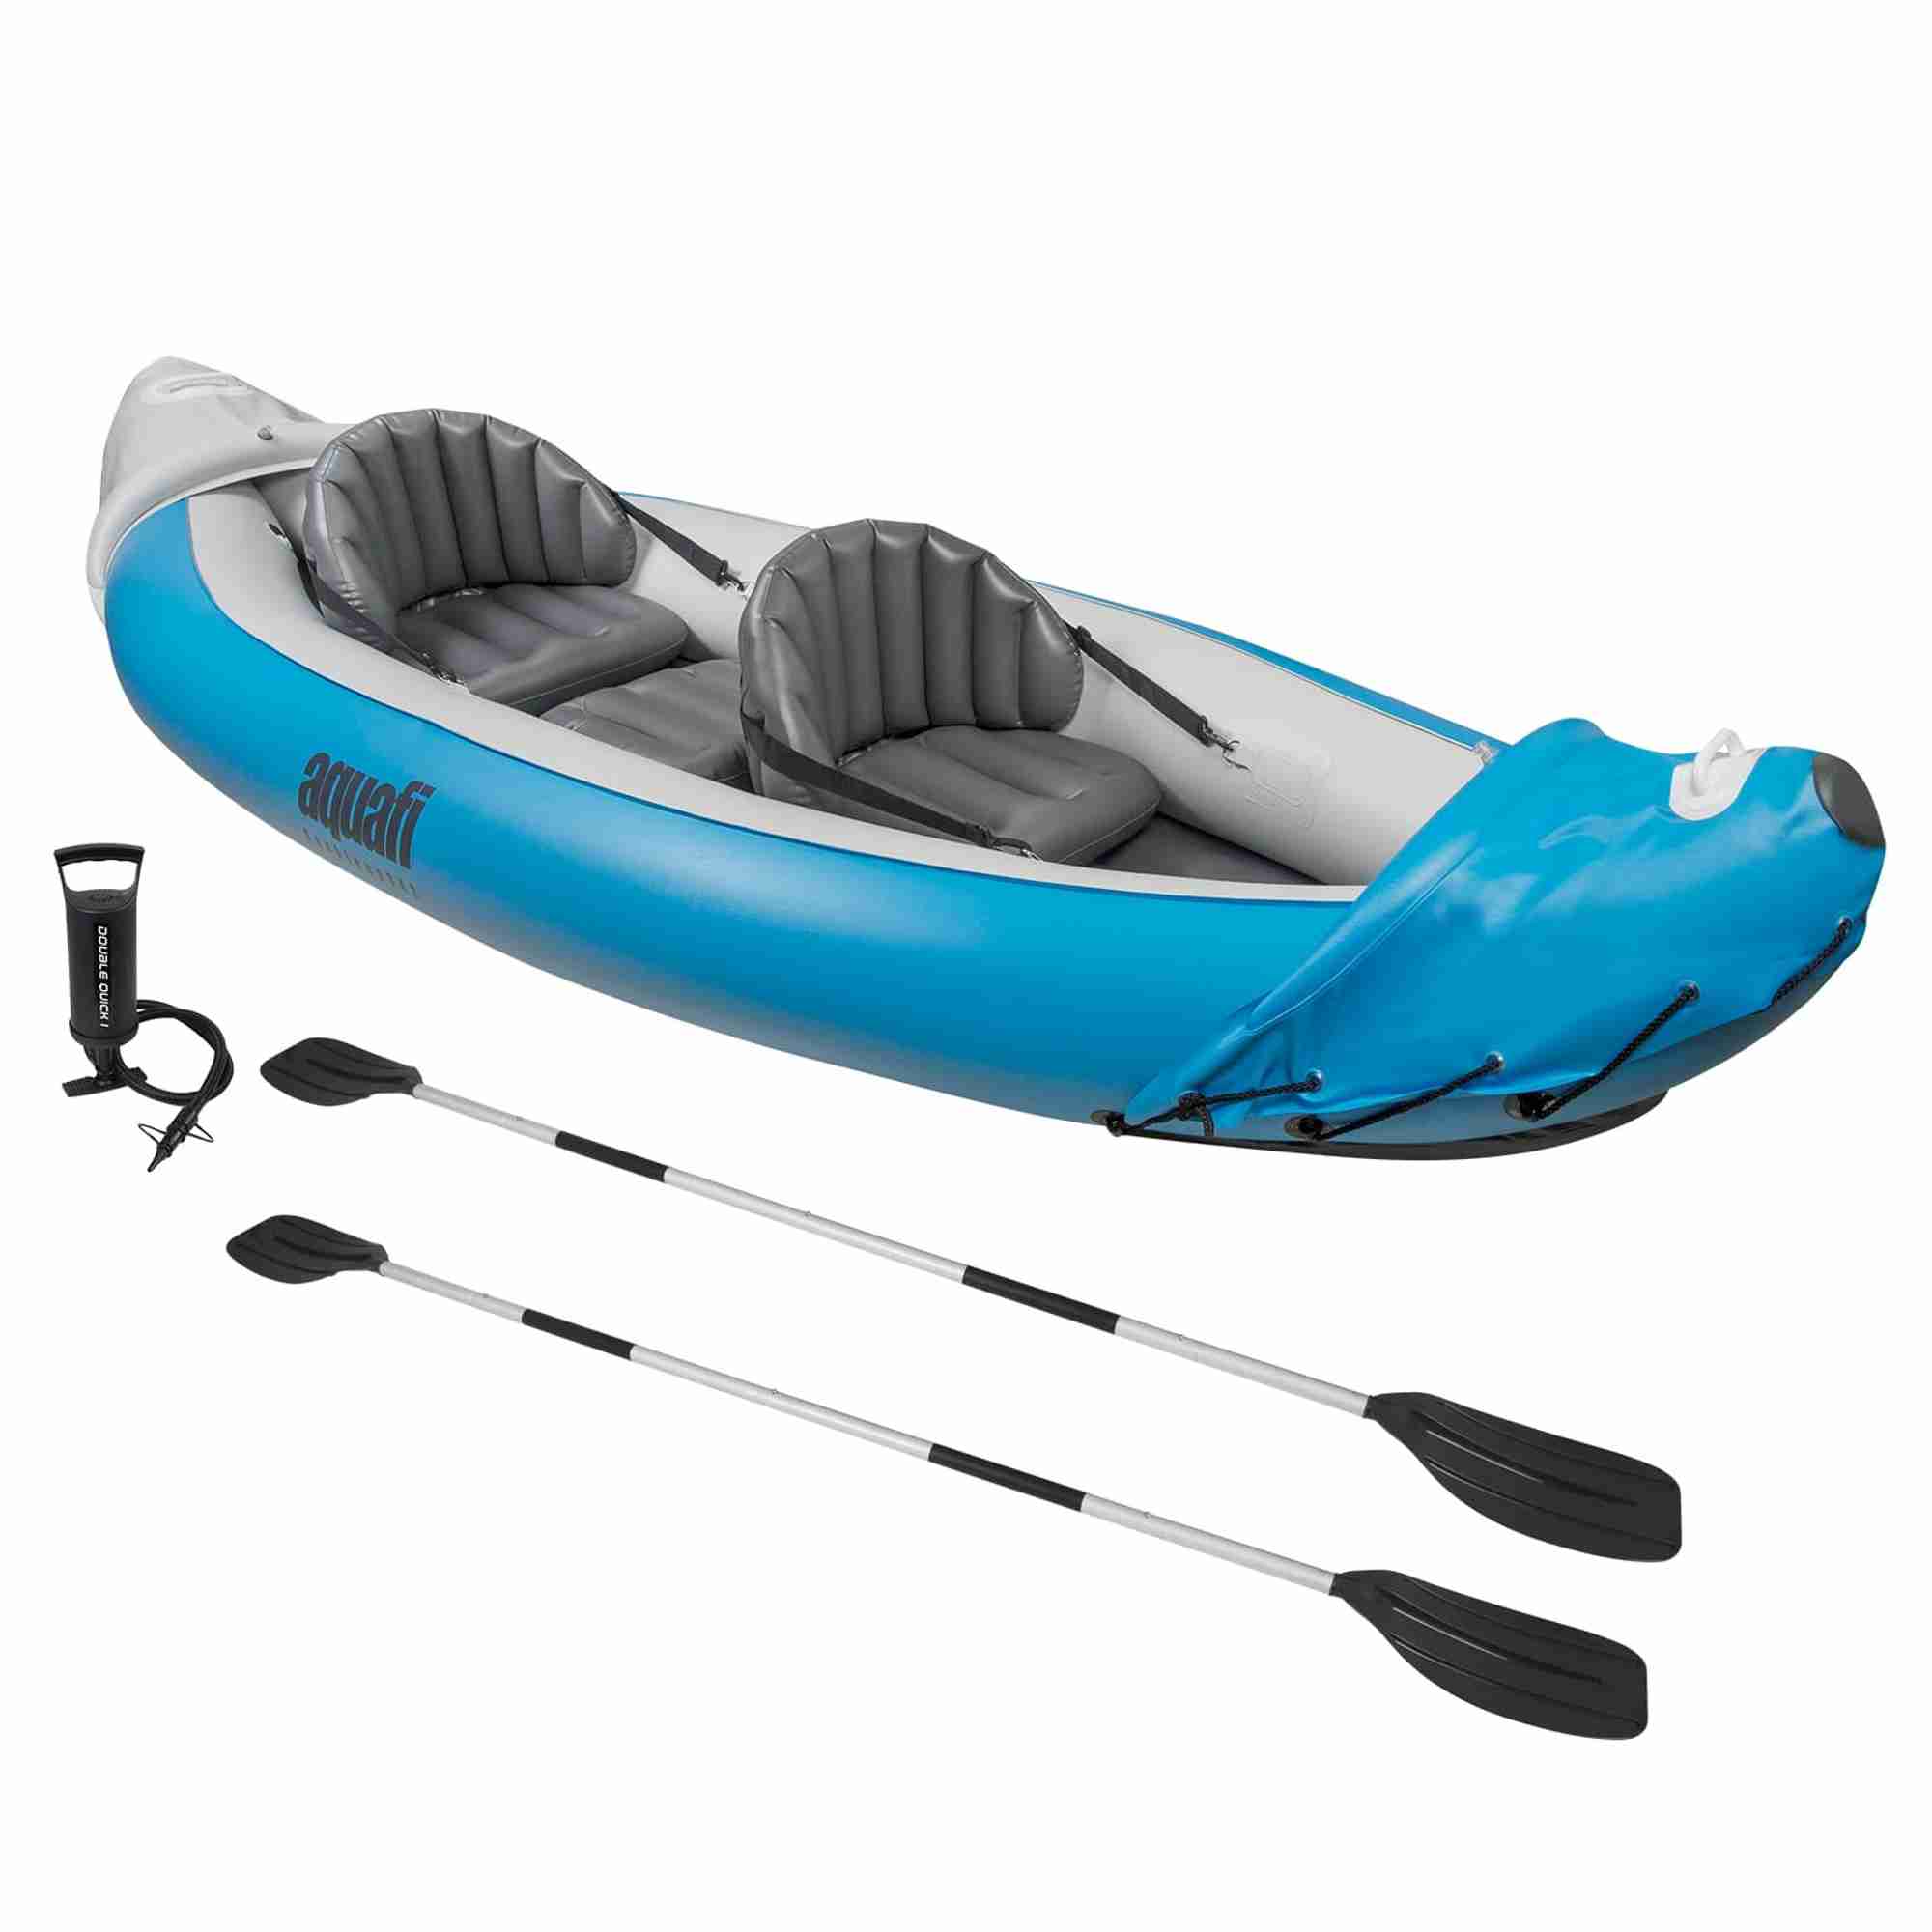 Aquafi Doubleup 342cm Inflatable 2 Person Kayak